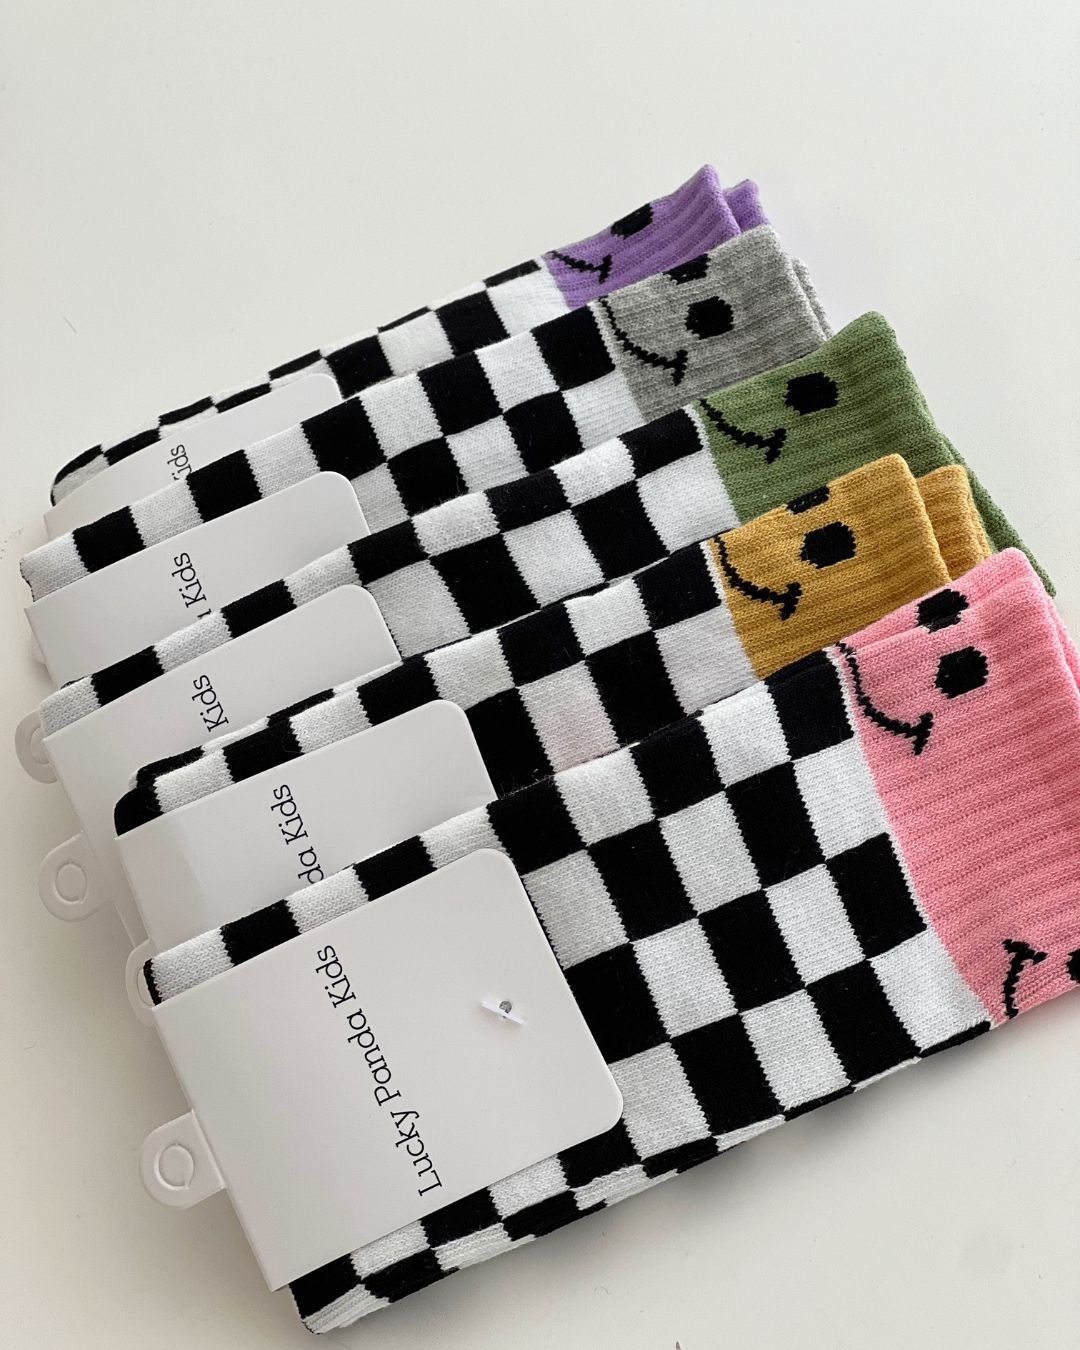 Checkered Smiley Socks, Purple